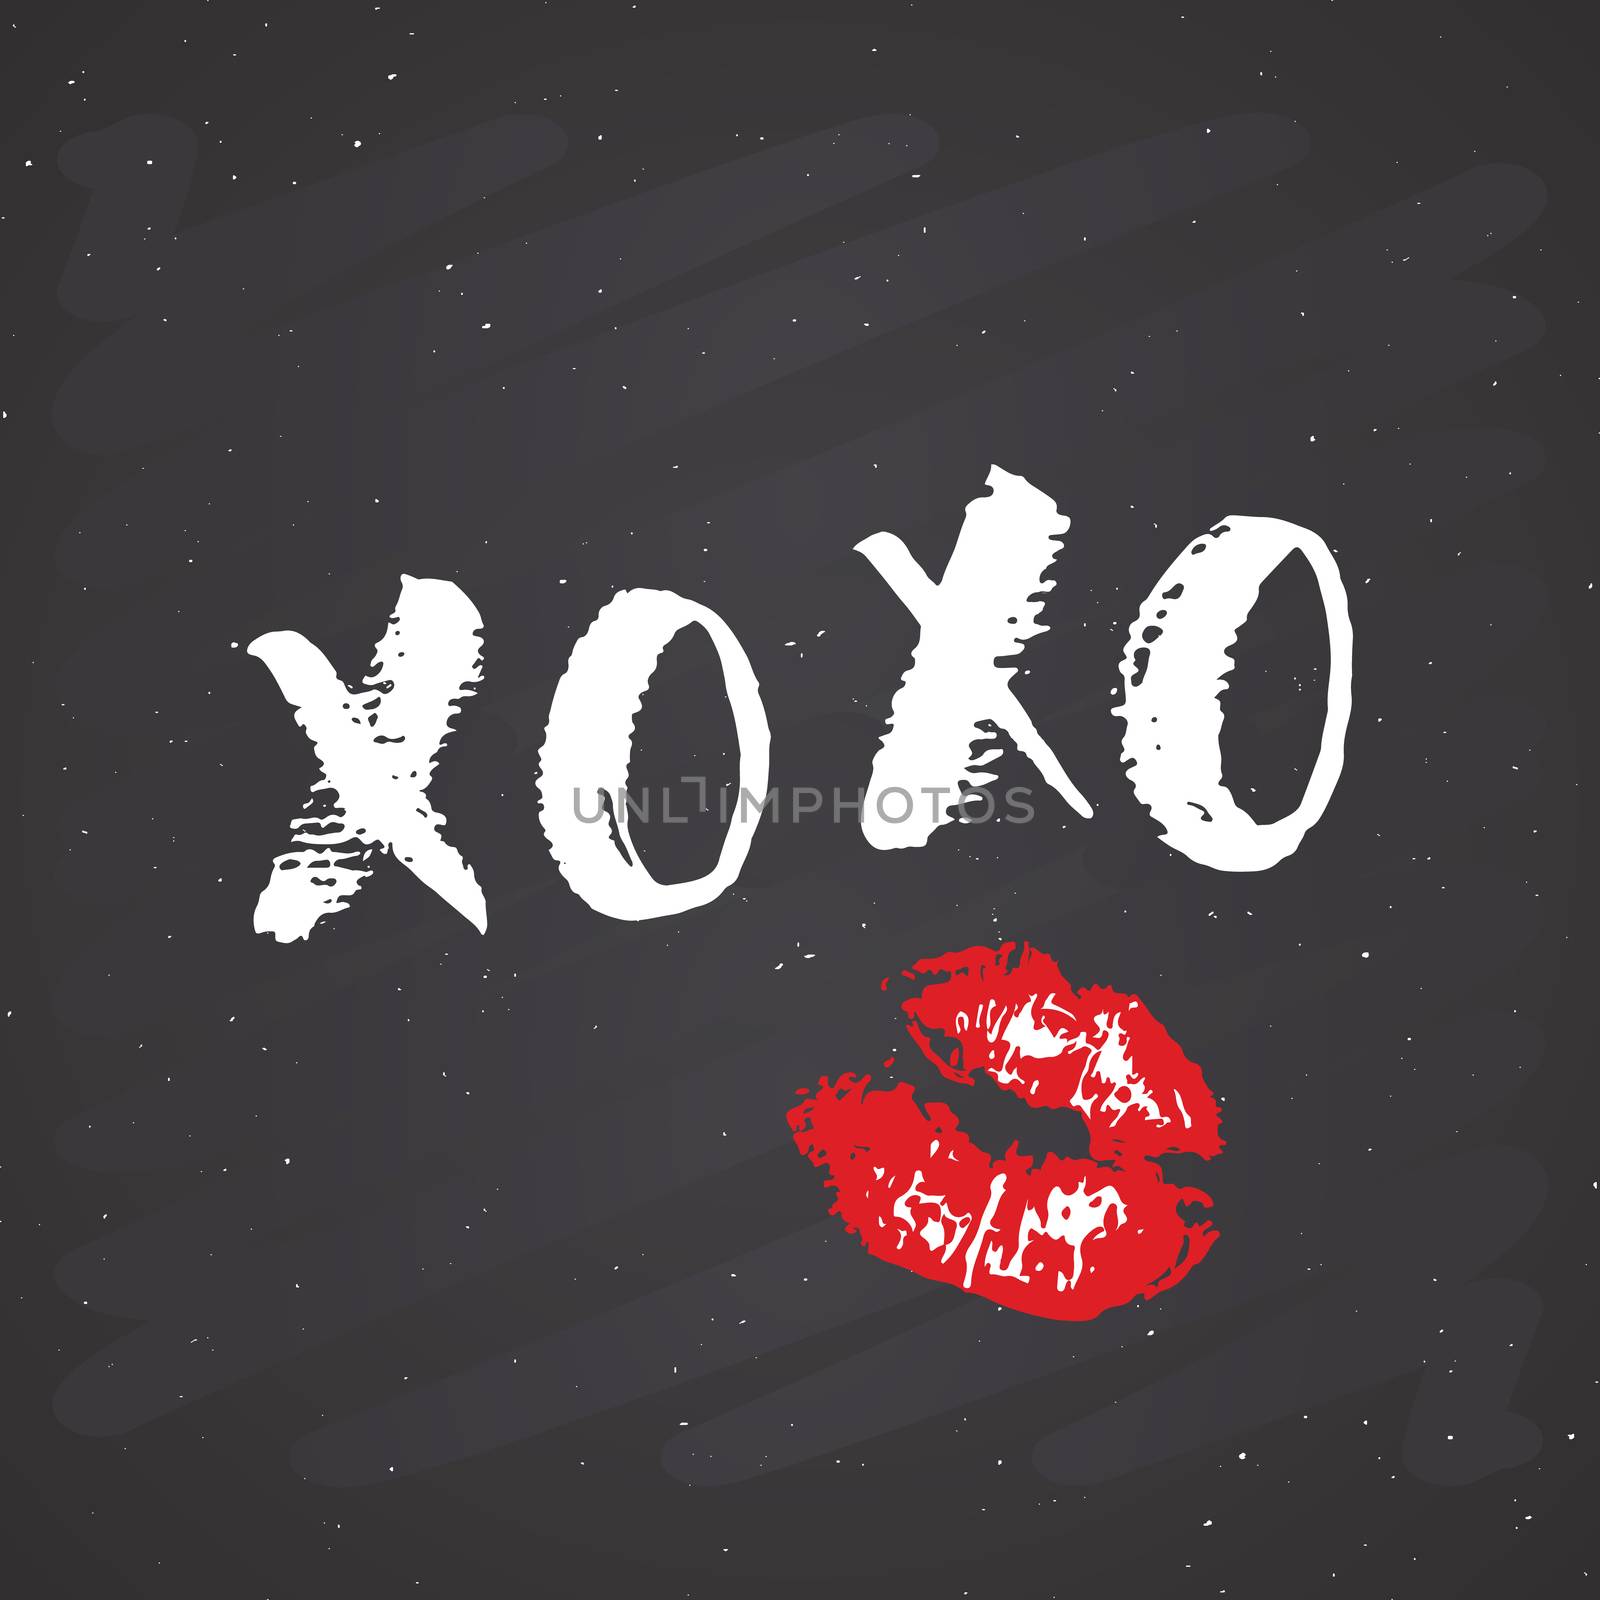 XOXO brush lettering sign, Grunge calligraphiv c hugs and kisses Phrase, Internet slang abbreviation XOXO symbols, vector illustration on chalkboard background.